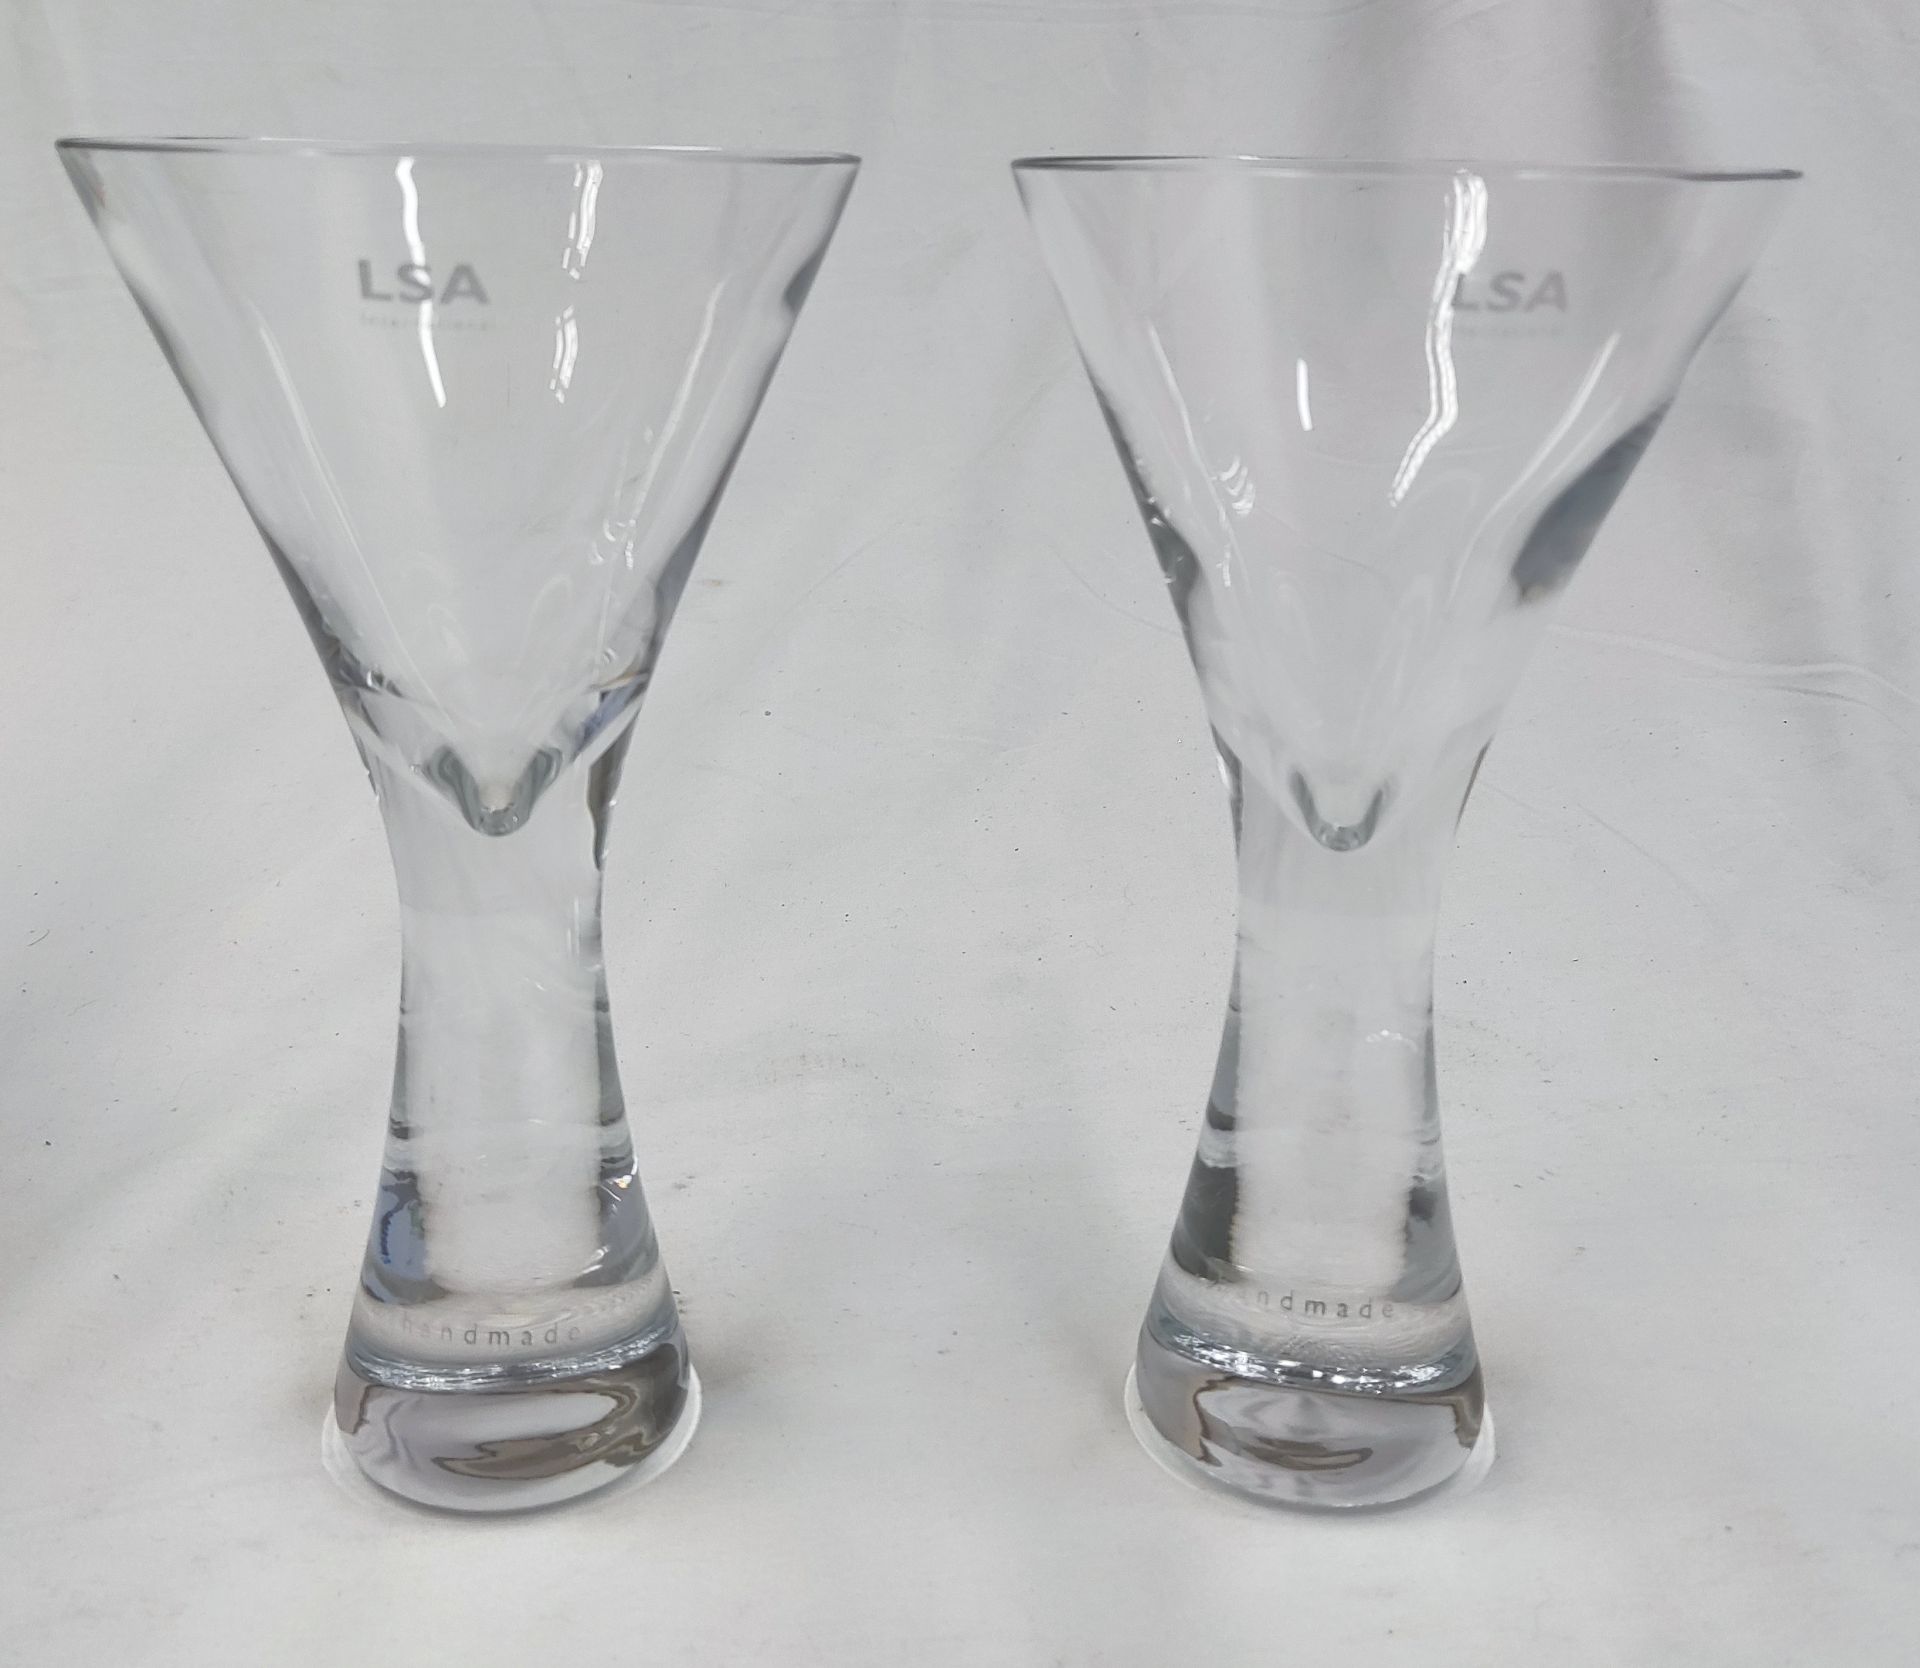 1 x LSA INTERNATIONAL 2 x Moya Wine Glasses - New/Boxed - Original RRP £59.99 - Image 11 of 13